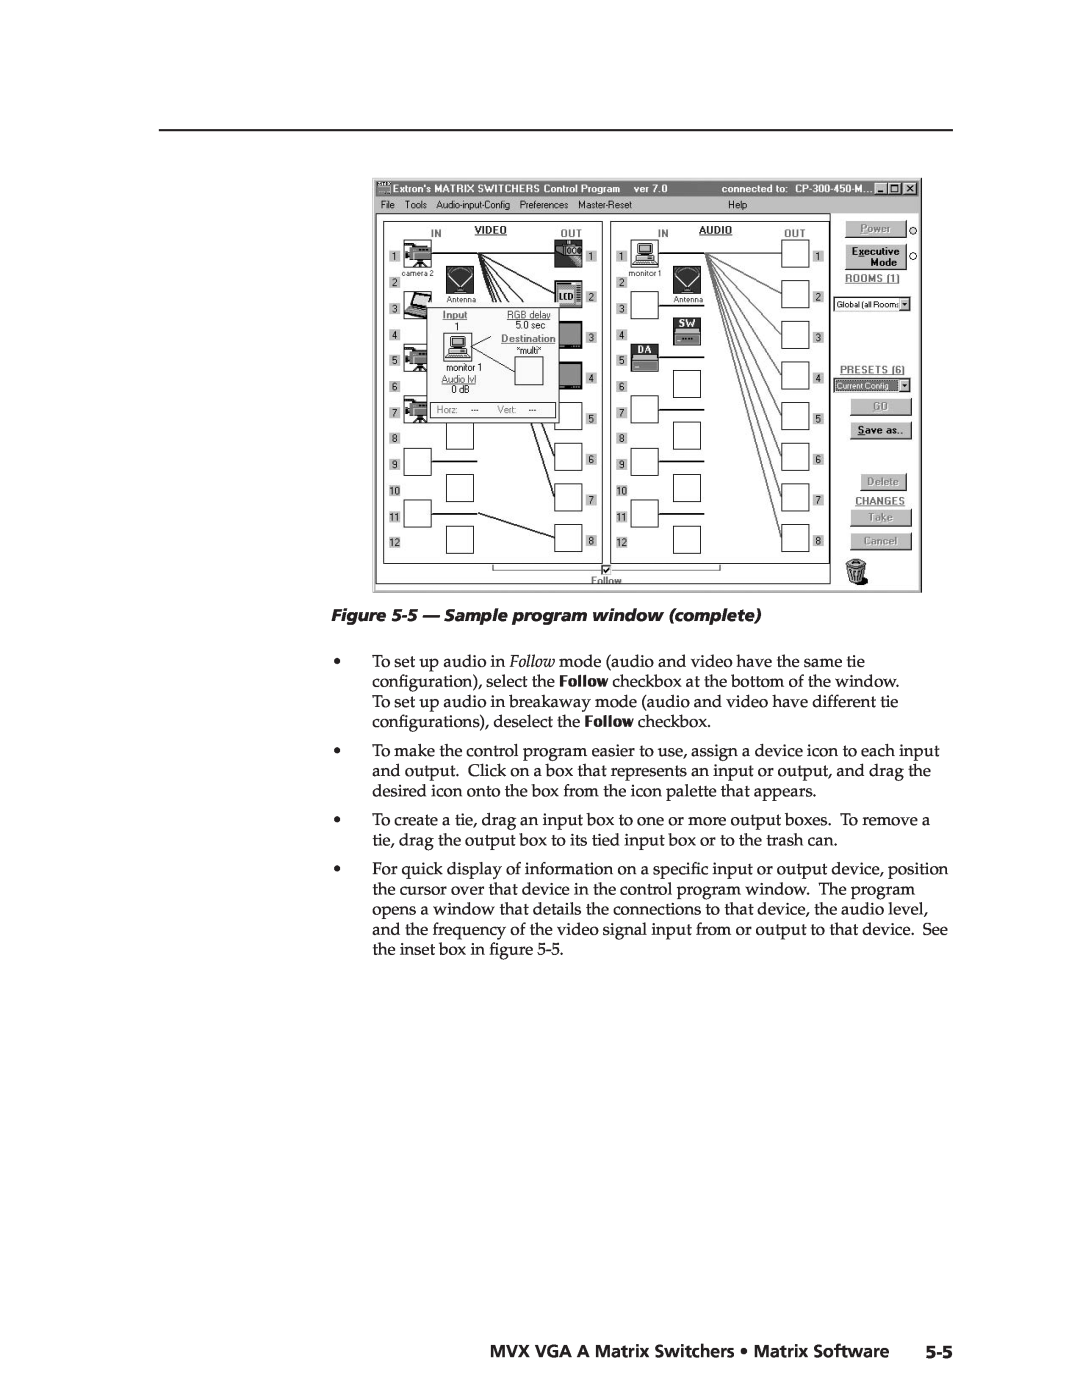 Extron electronic manual 5 - Sample program window complete, Preliminary, MVX VGA A Matrix Switchers Matrix Software 